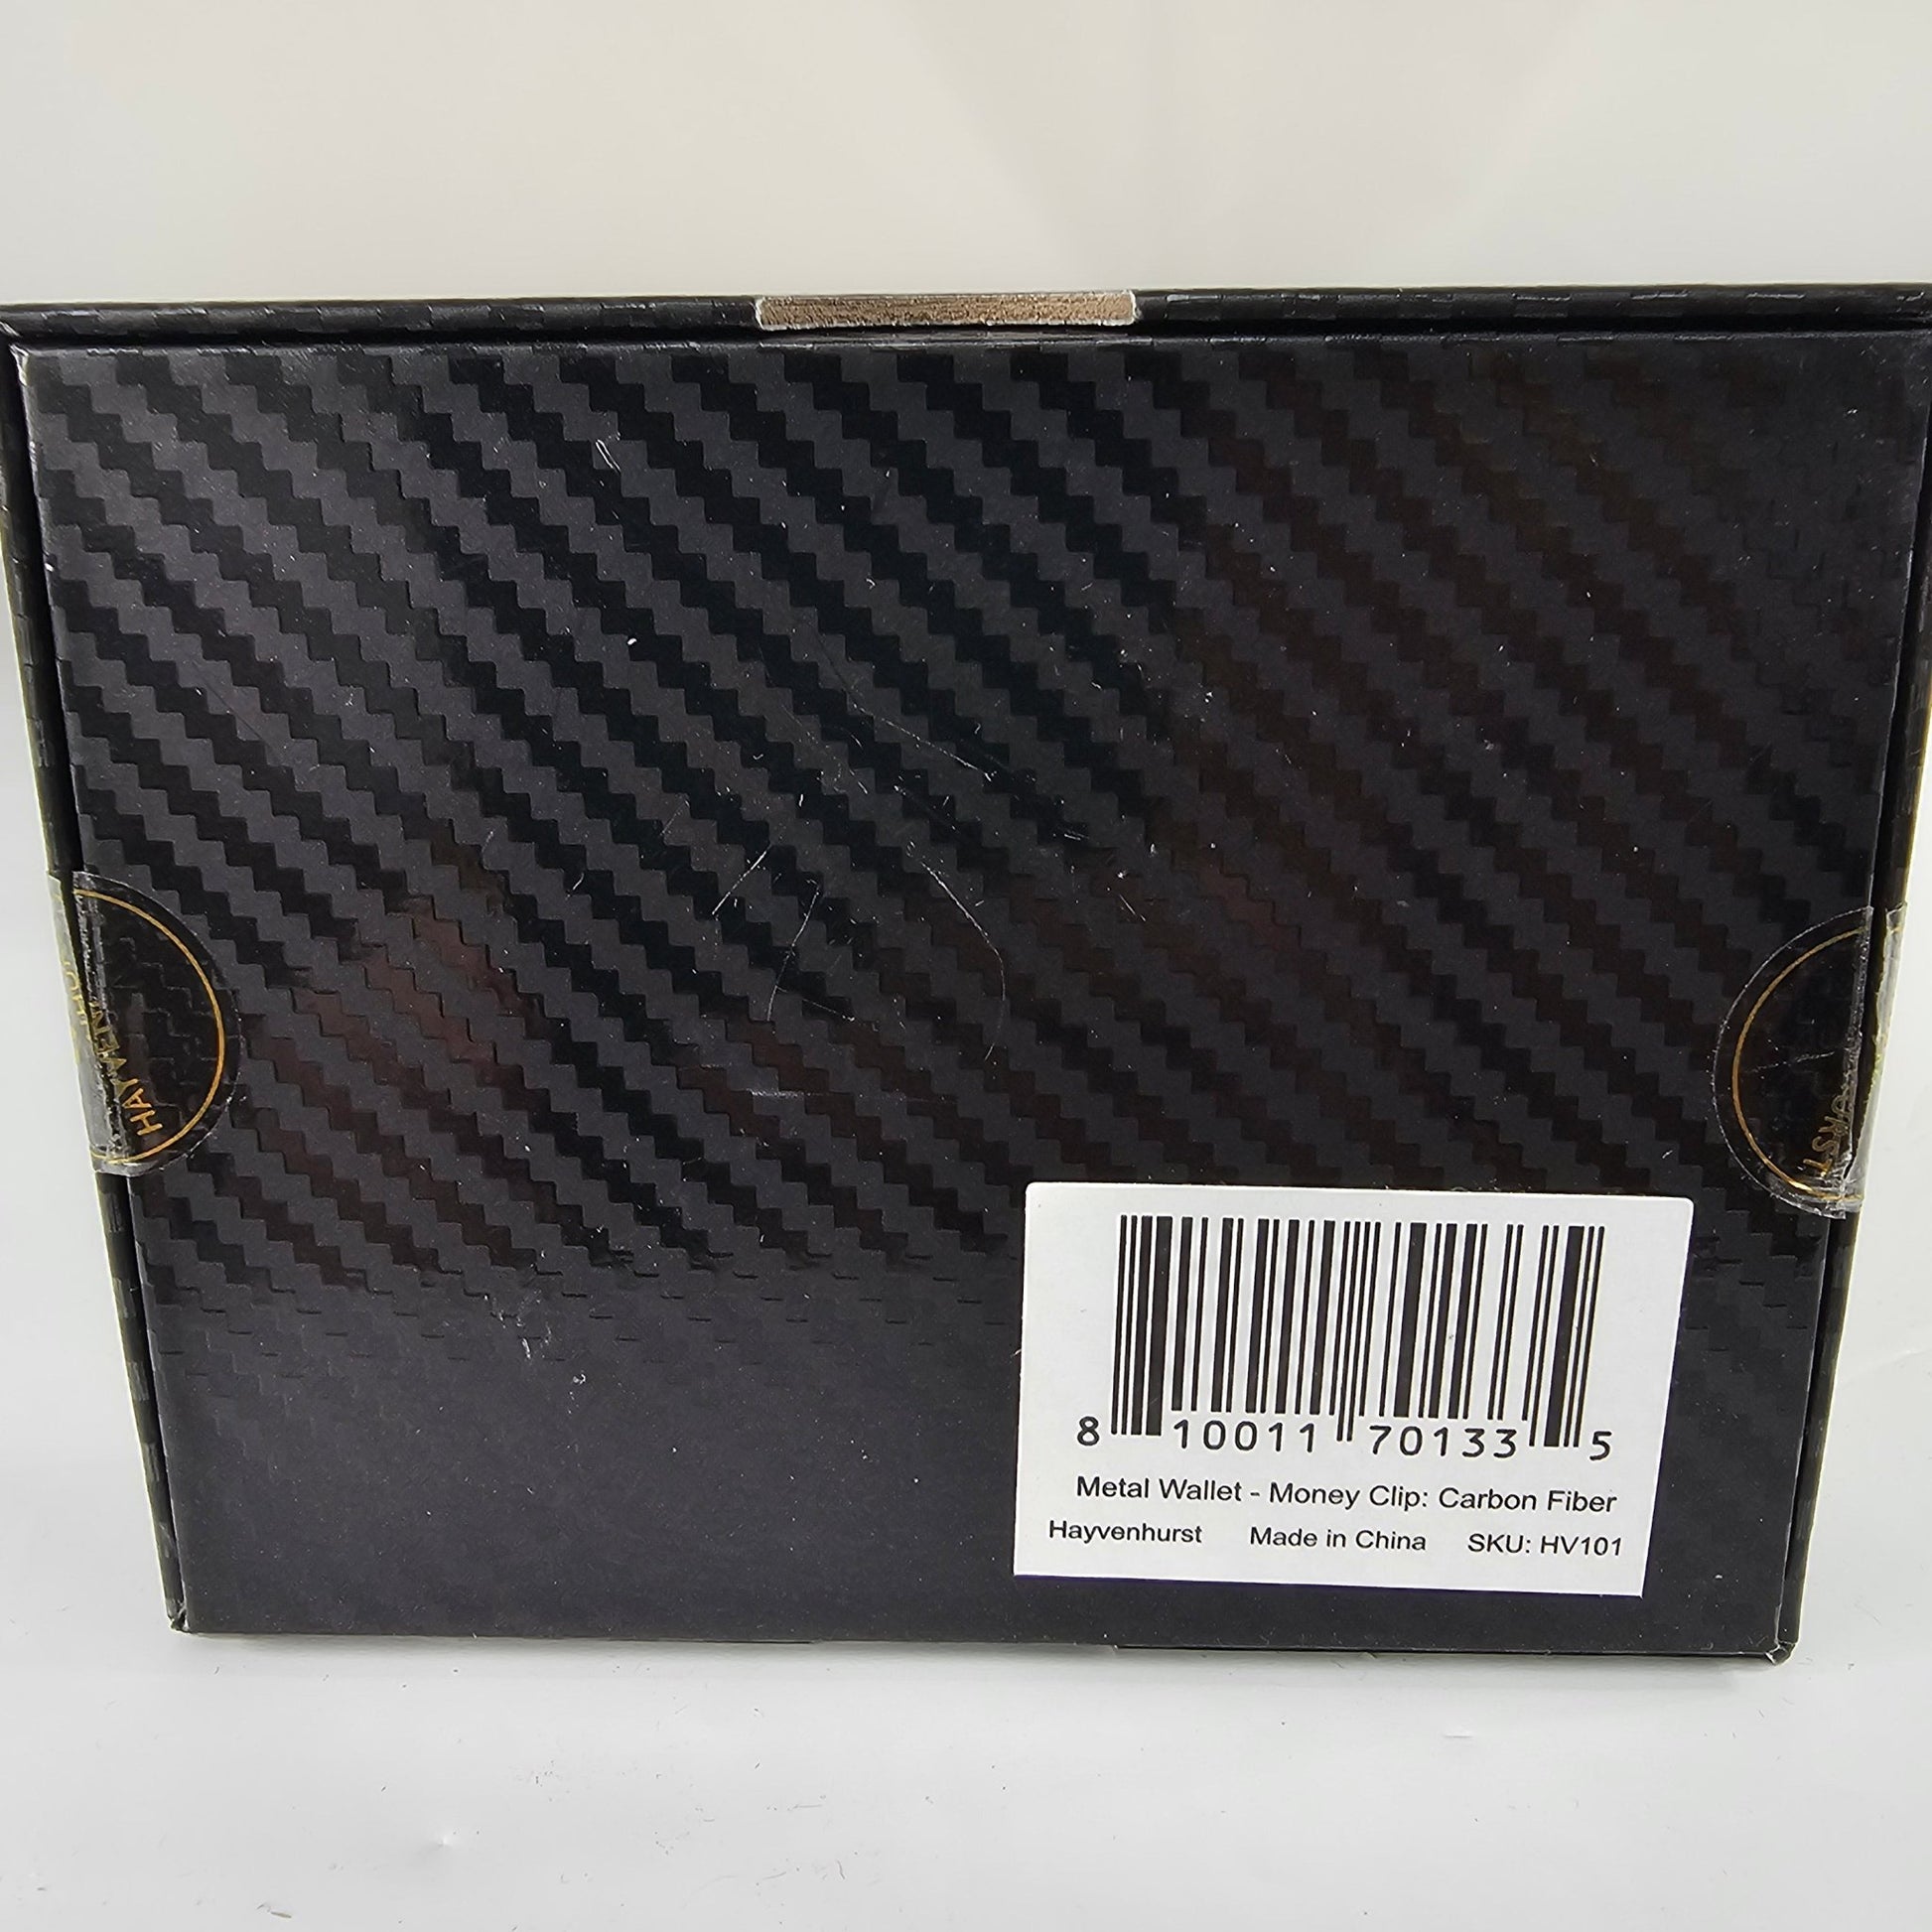 Metal Wallet Money Clip Carbon Fiber Hayvenhurst HV101 - DQ Distribution